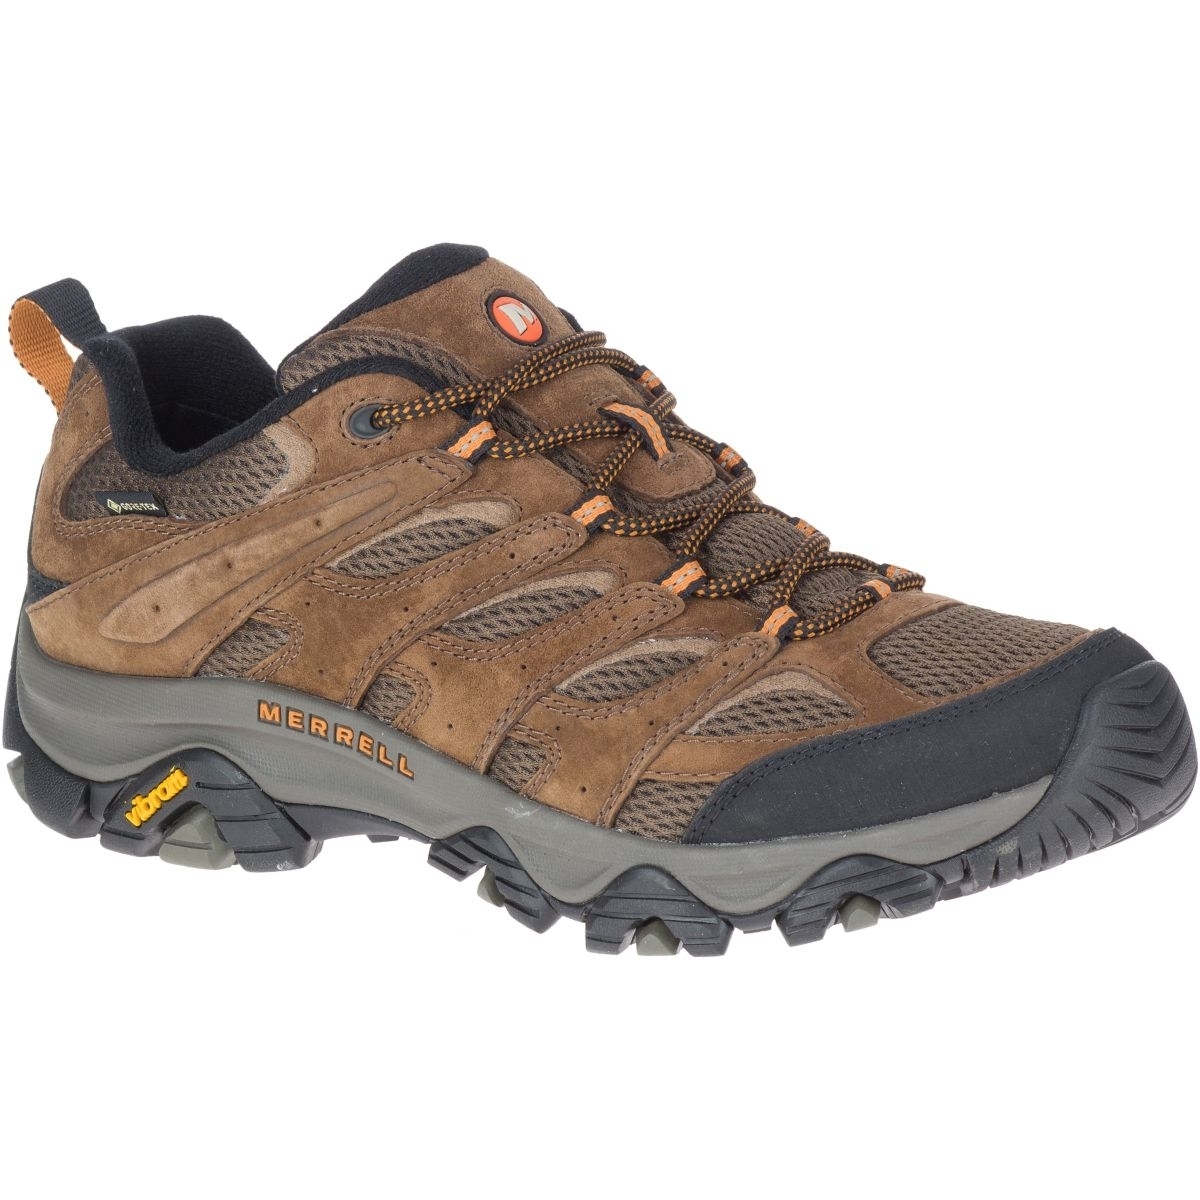 Merrell Men's Moab 3 GORE-TEX Hiking Shoe Earth - J036257 EARTH - Brown, 11.5